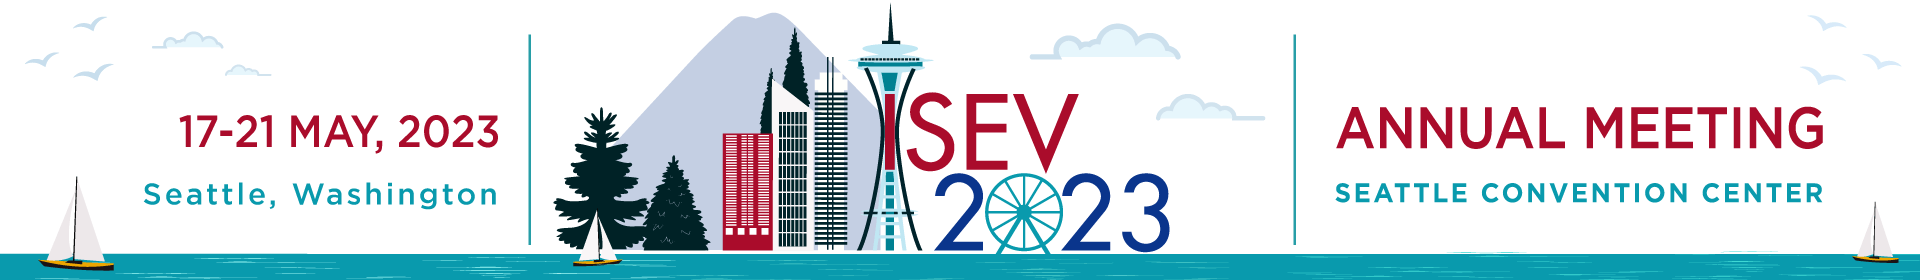 ISEV 2023 Annual Meeting Banner